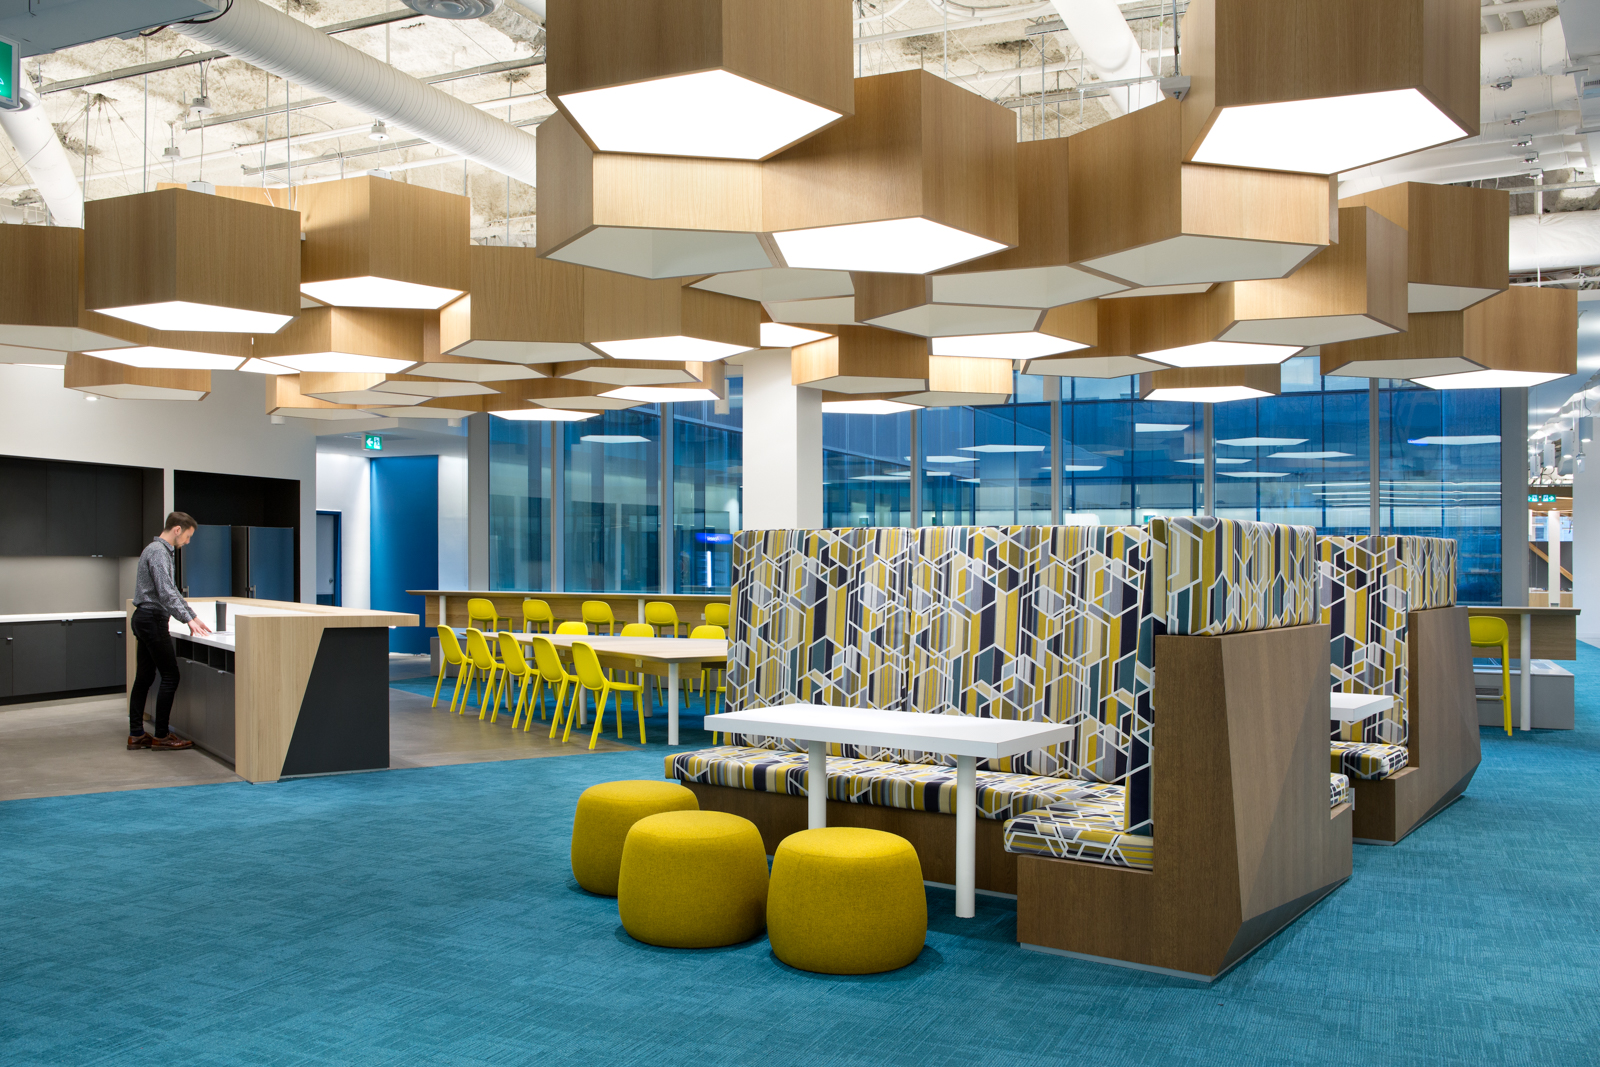 New Microsoft offices boast ultramodern design and stunning views -  Microsoft Life